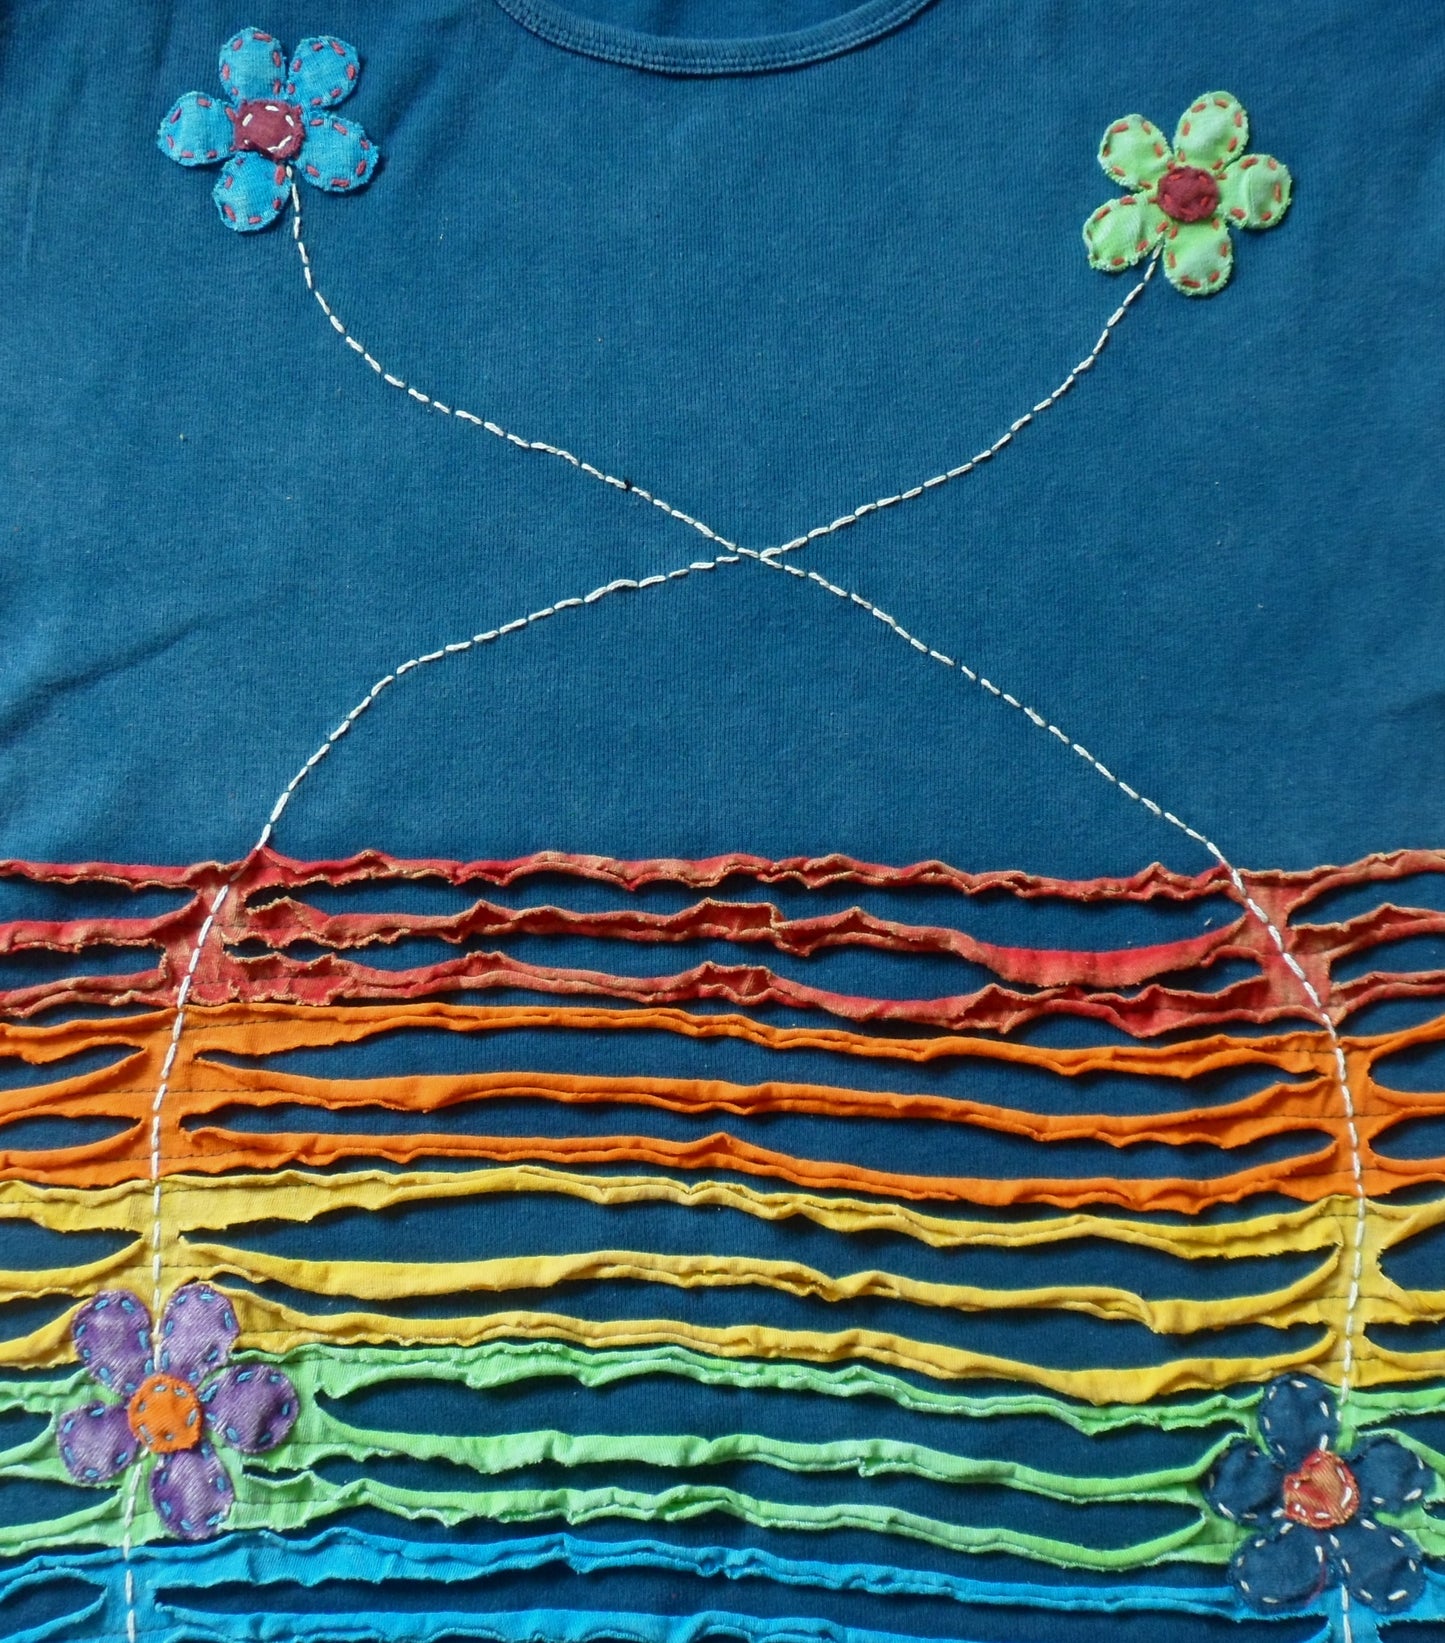 Nepalese Cotton Applique Flower Hippy Festival Rainbow Razor Cut T-Shirt Top